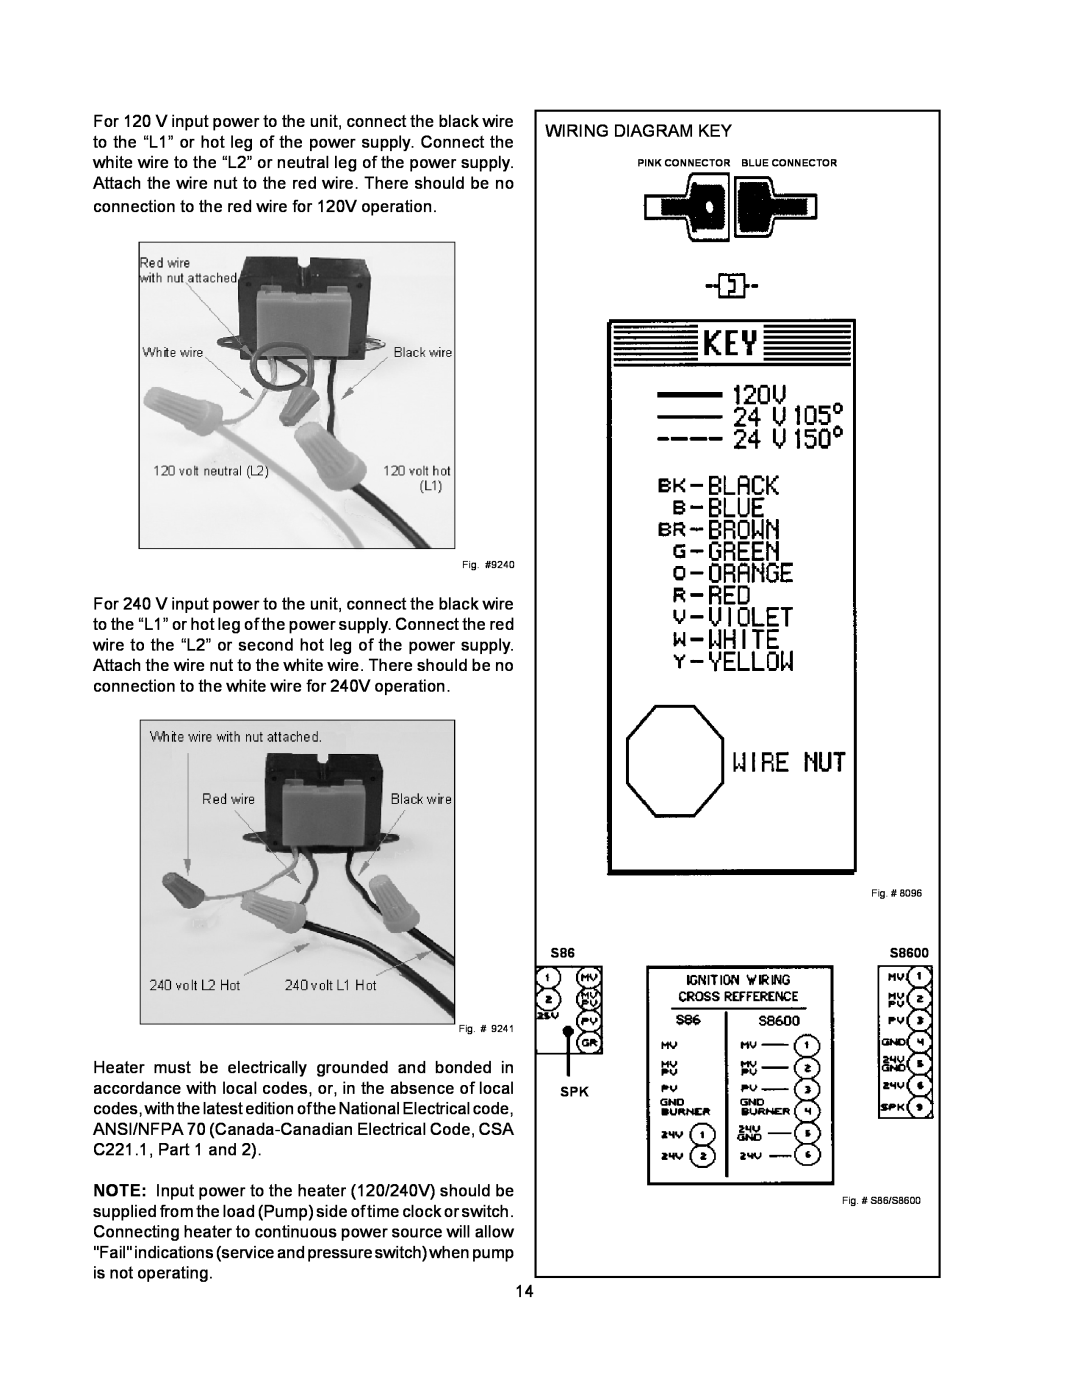 Raypak 055B installation instructions Wiring Diagram Key 